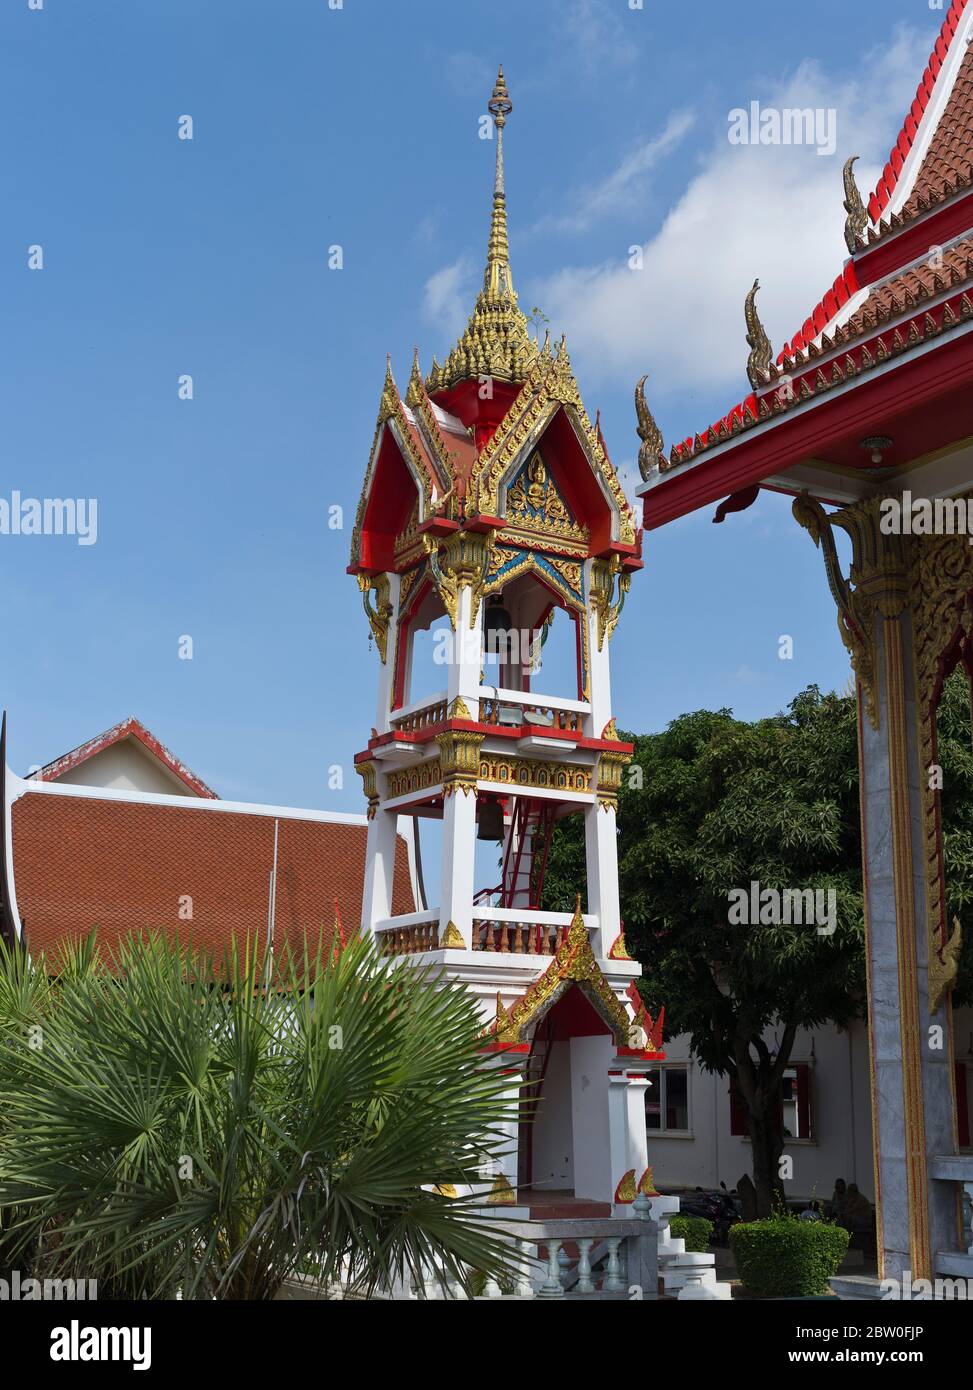 dh Wat chalong tempio buddista PHUKET THAILANDIA buddisti torre campanaria buddismo Foto Stock